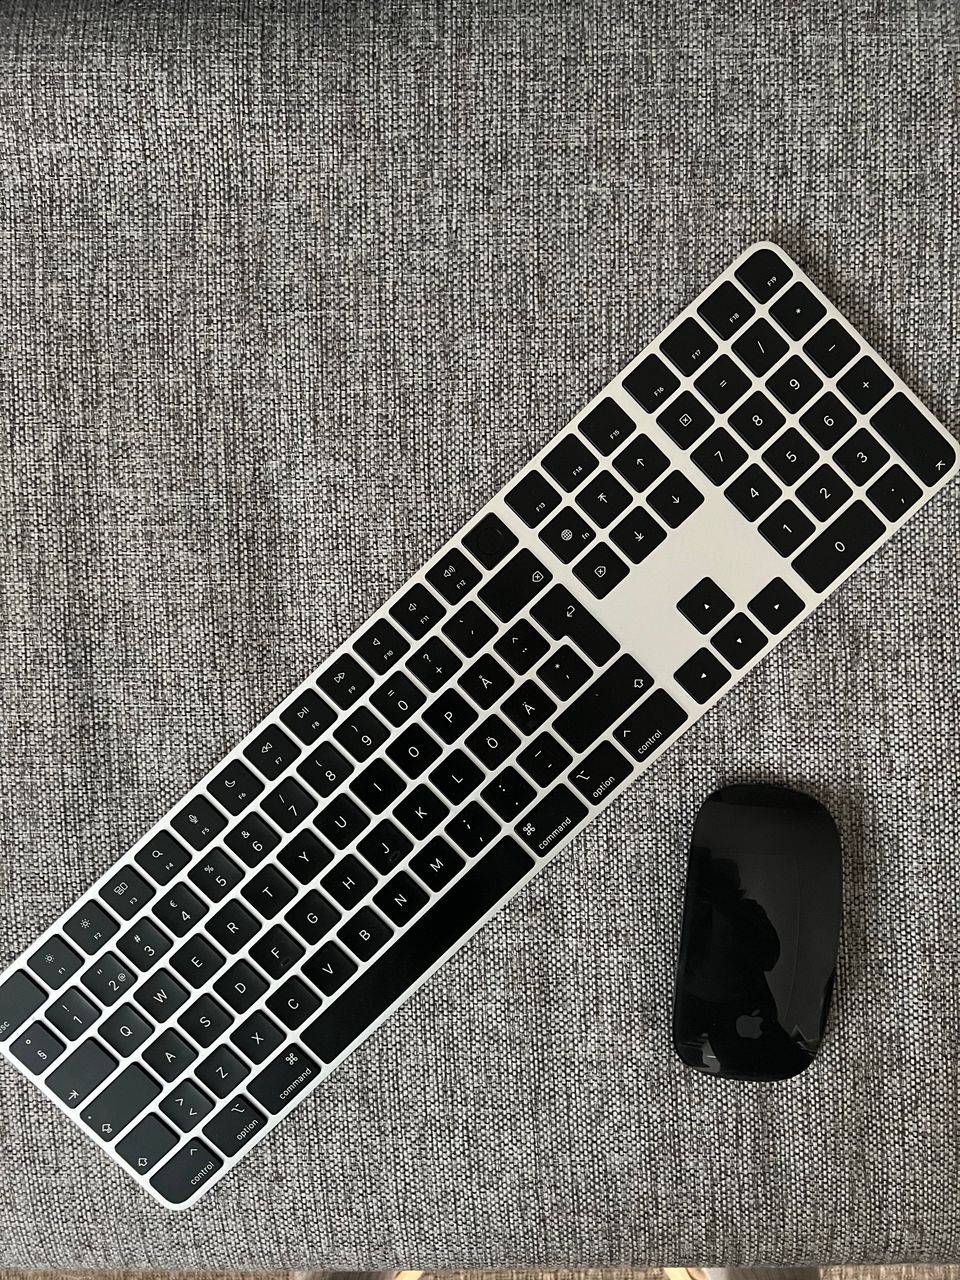 Magic Mouse 2 A1657 & Magic Keyboard A2520